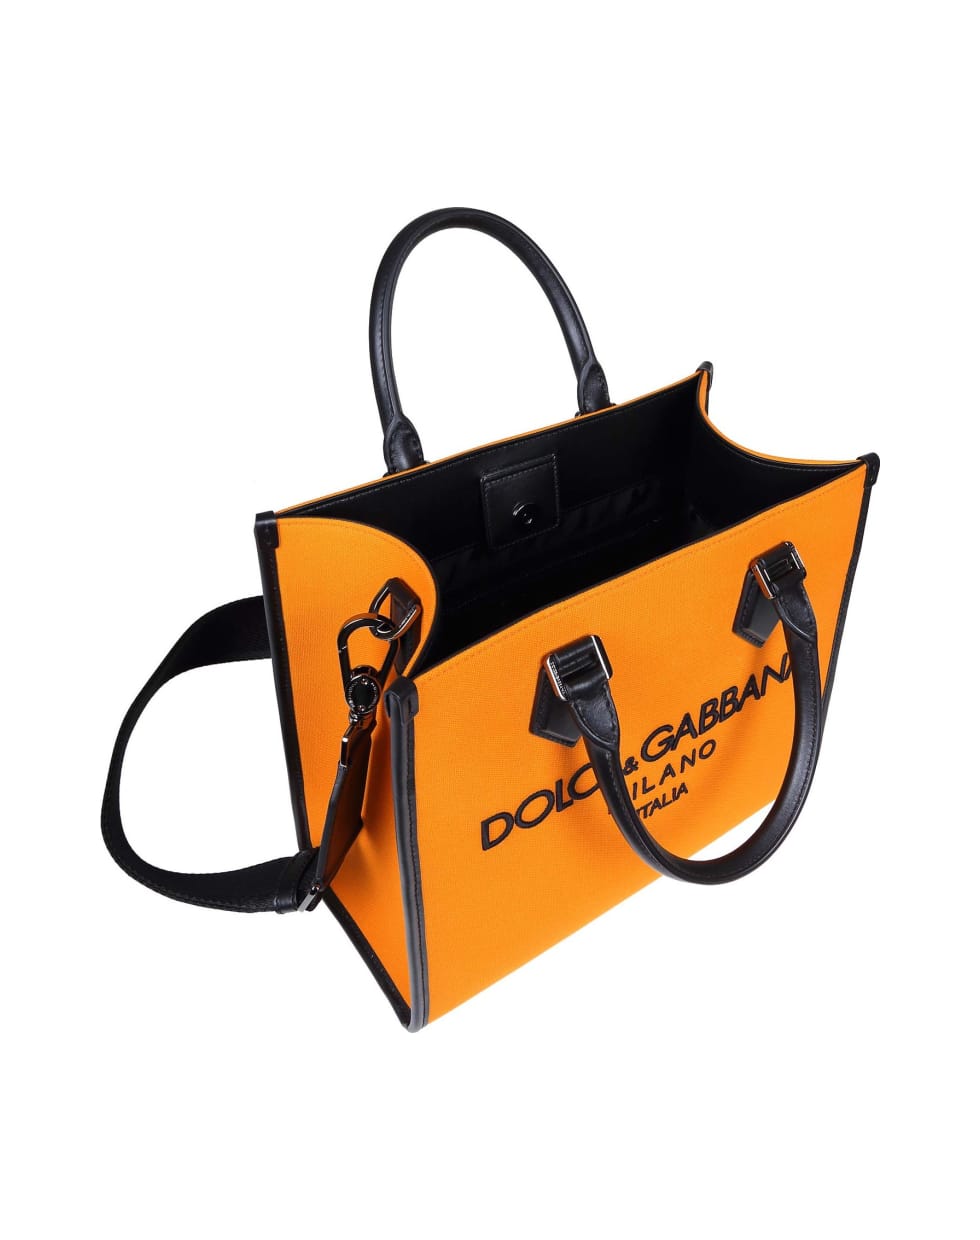 Dolce & Gabbana Handbag In Canvas With Logo - Black / Orange